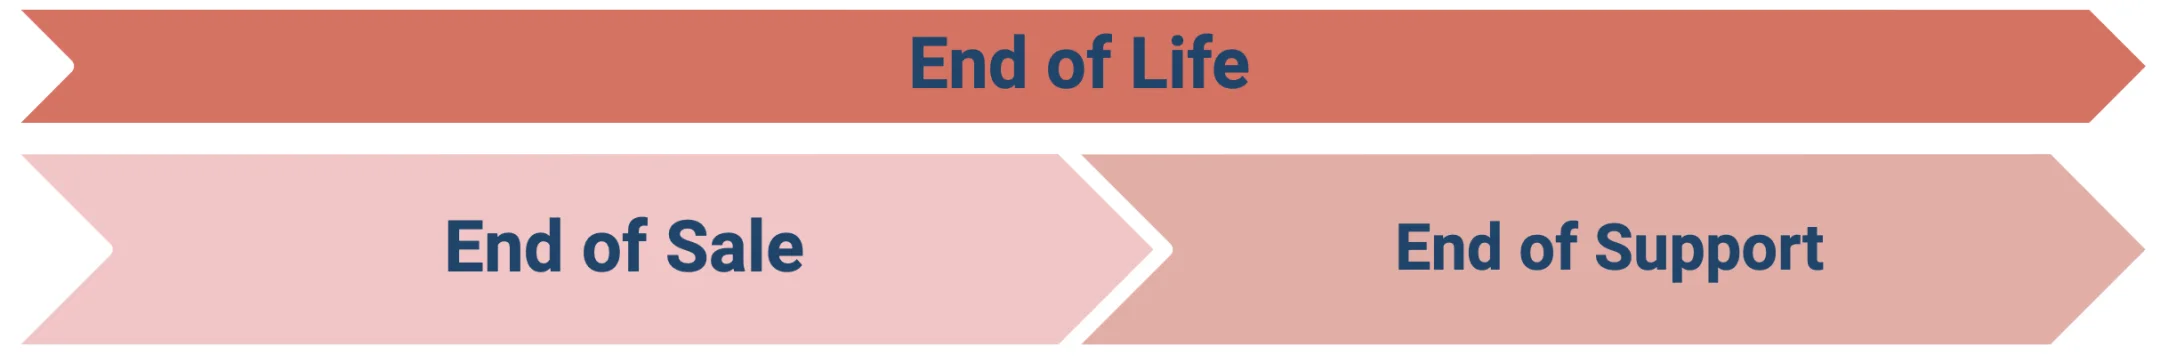 End of life image diagram Samsara